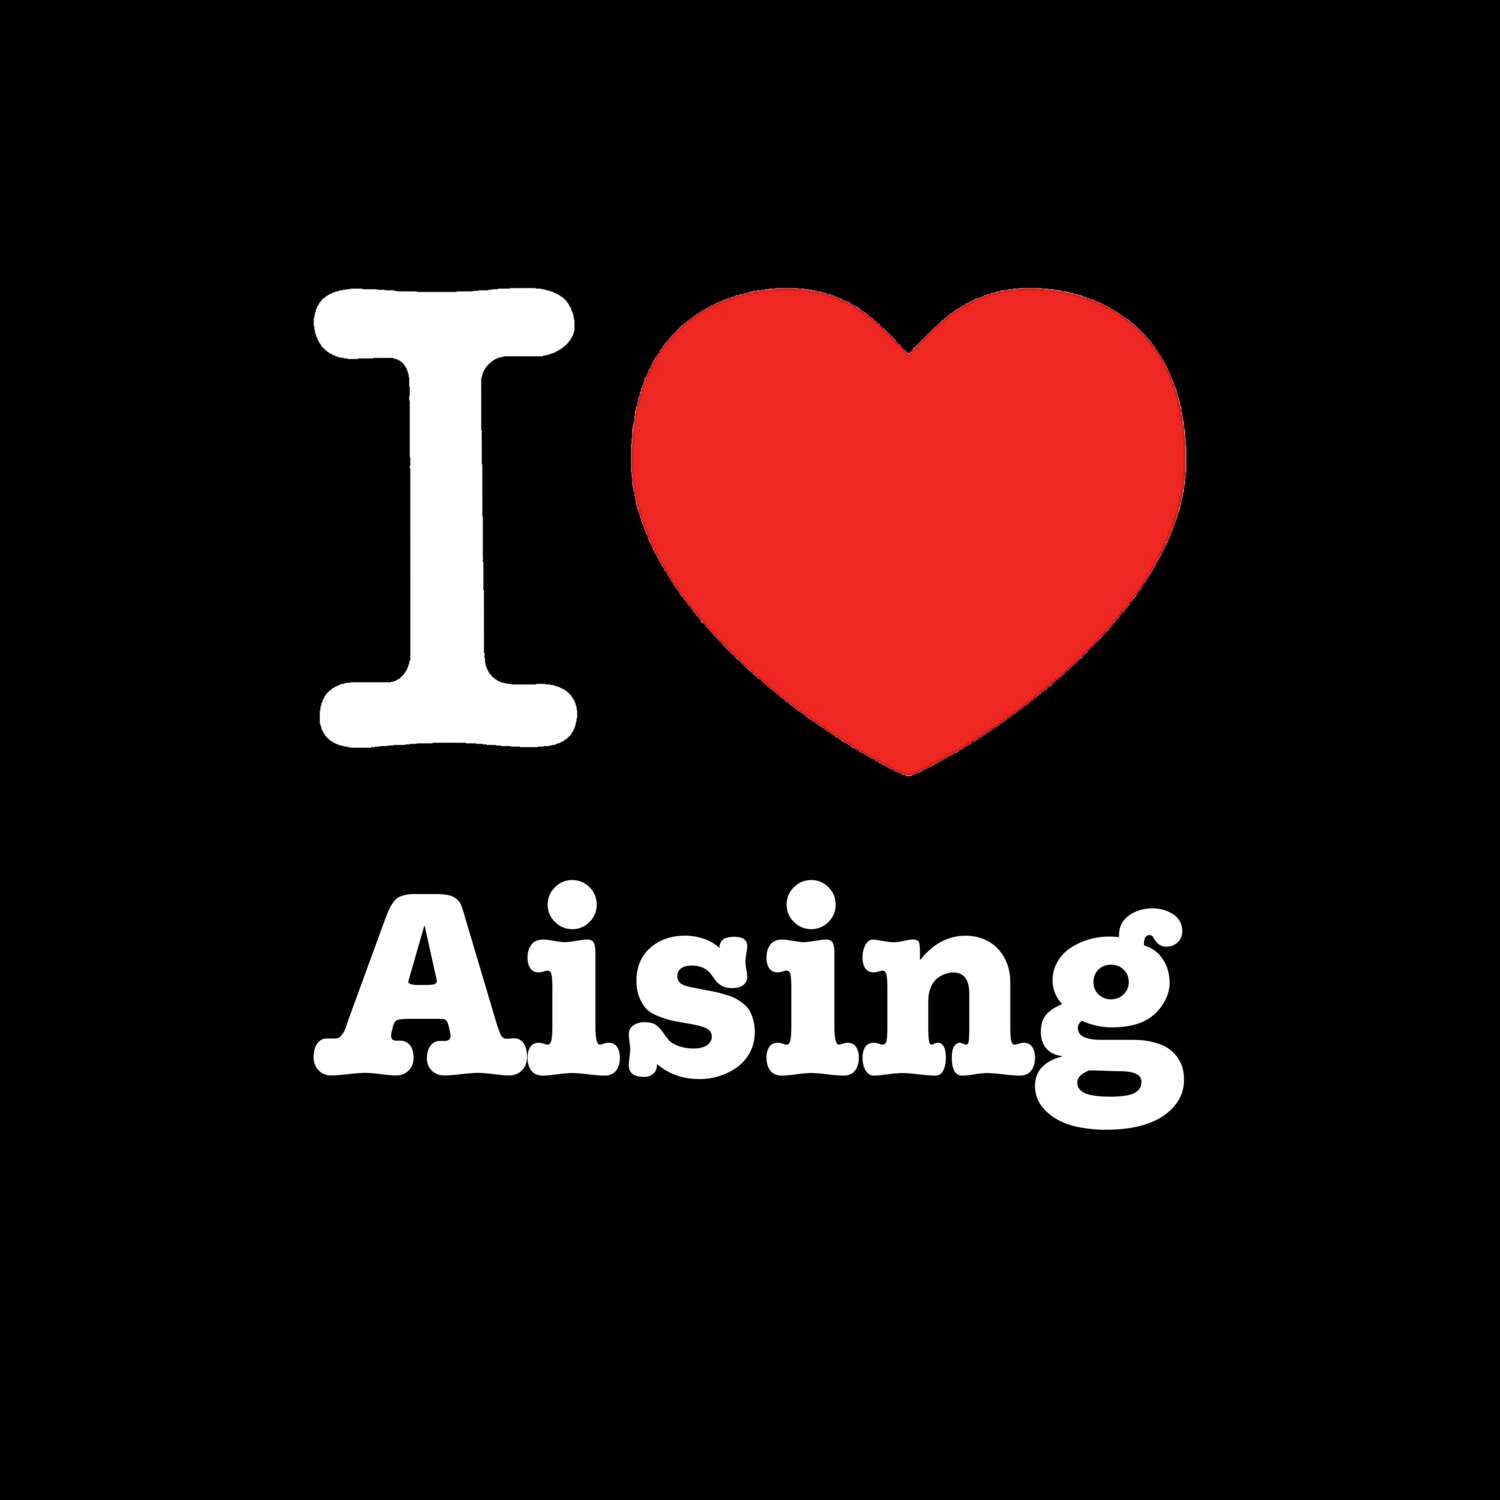 Aising T-Shirt »I love«